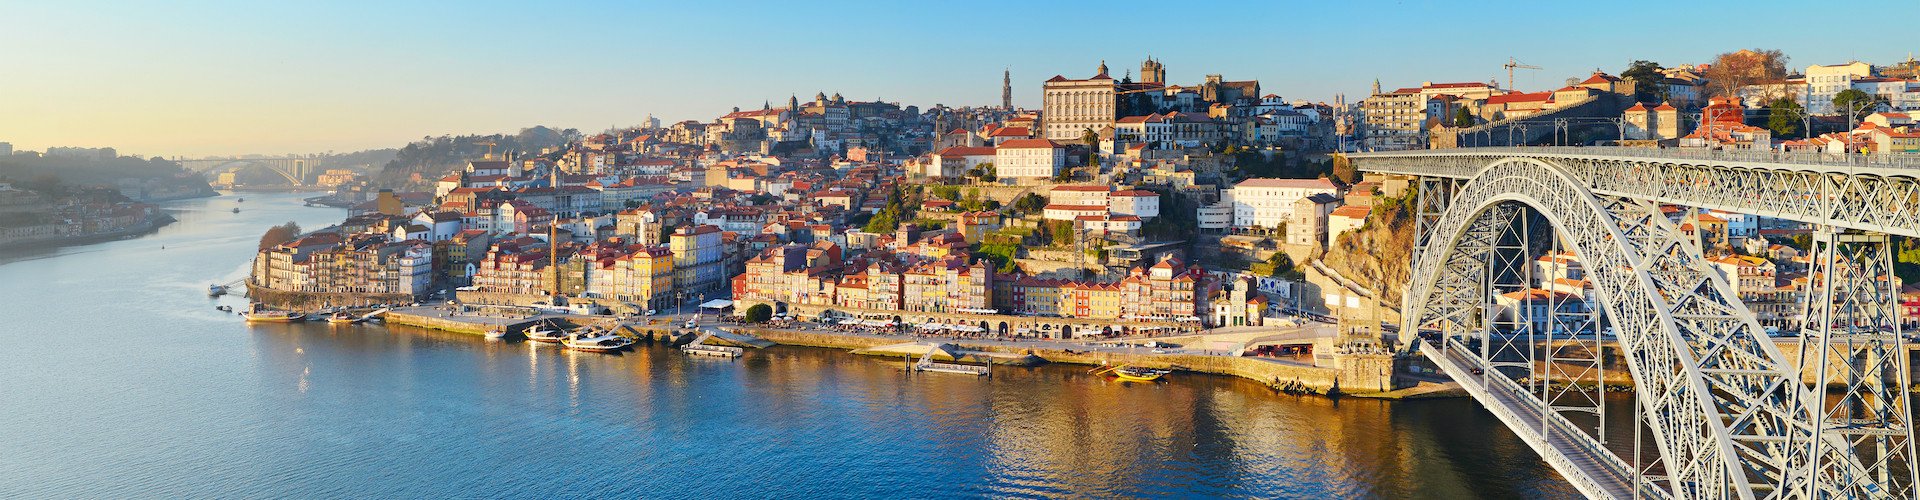 Familienurlaub in Portugal